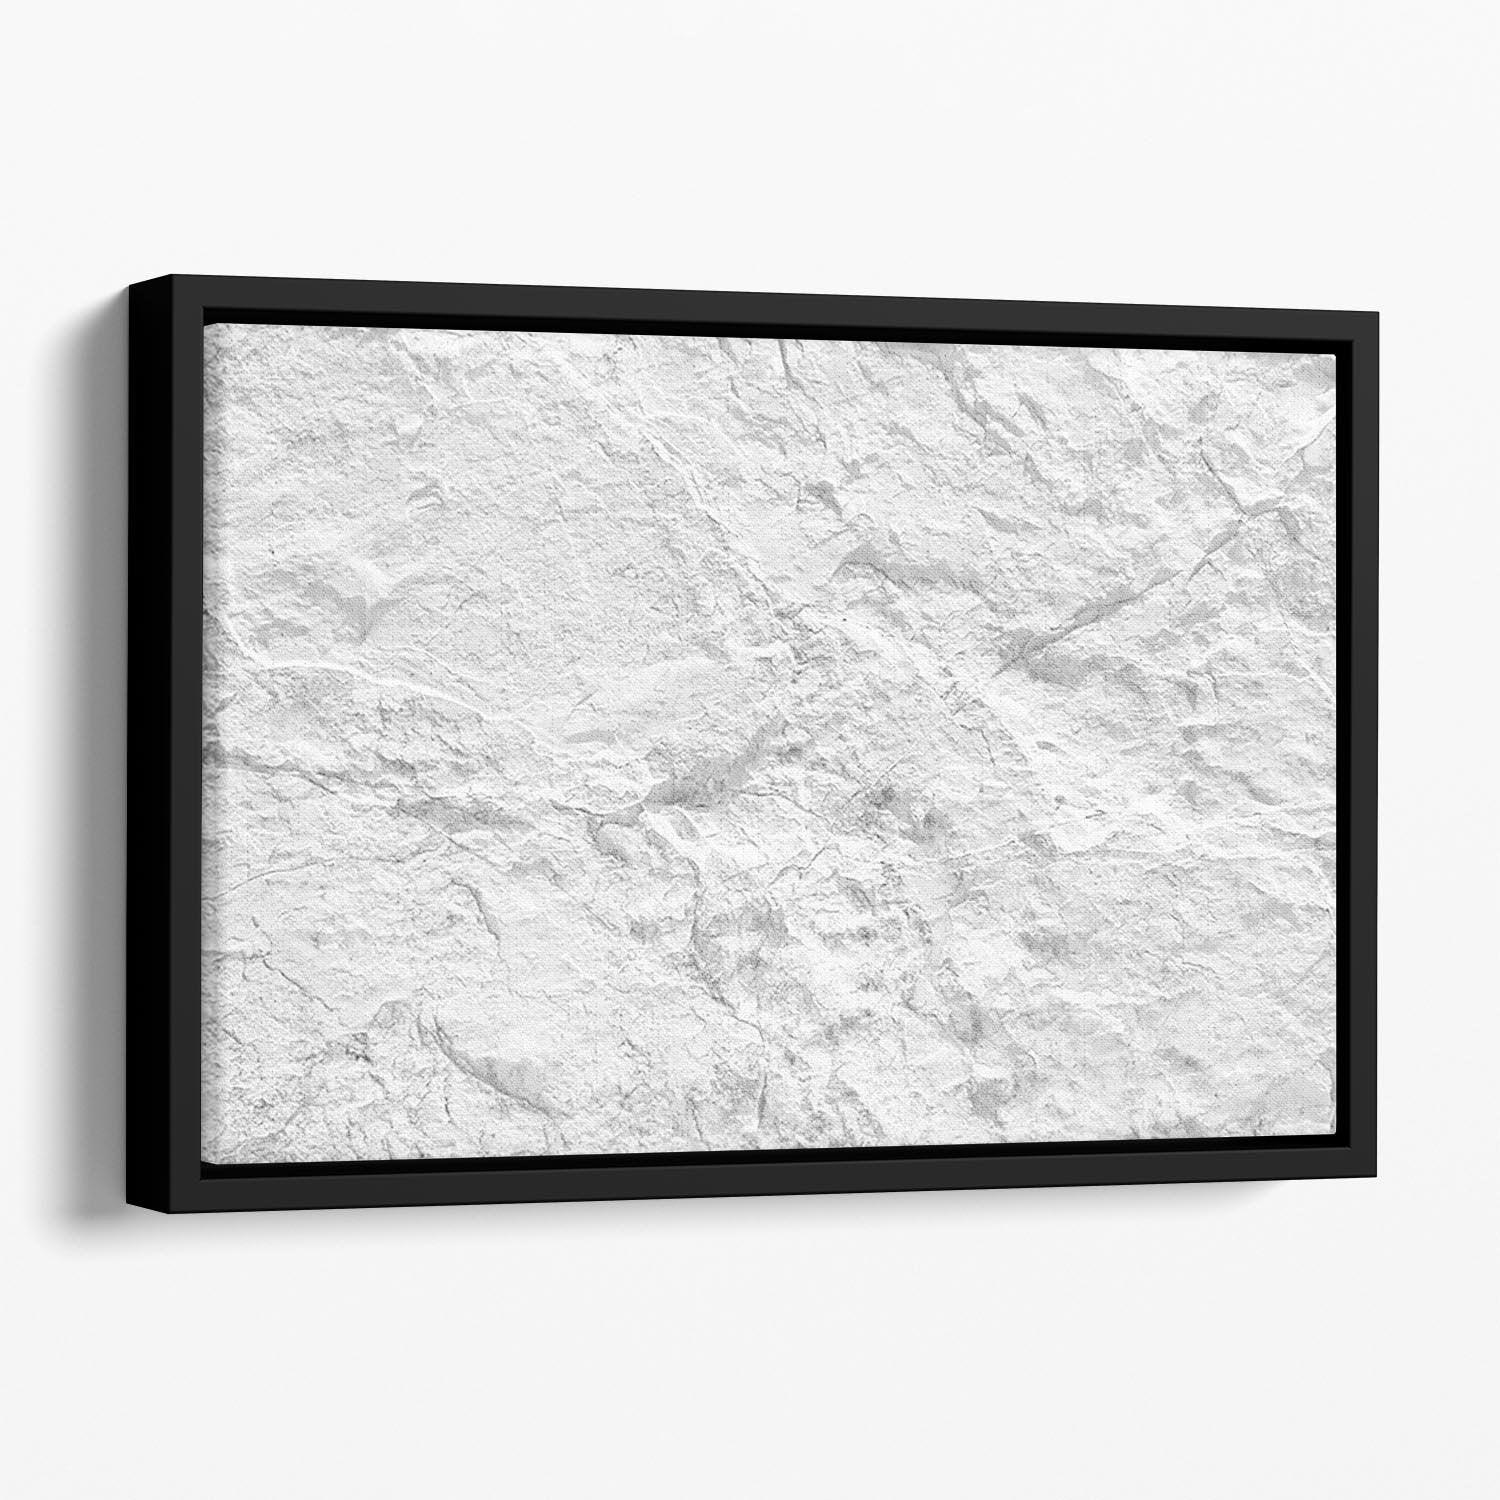 Background of white stone Floating Framed Canvas - Canvas Art Rocks - 1